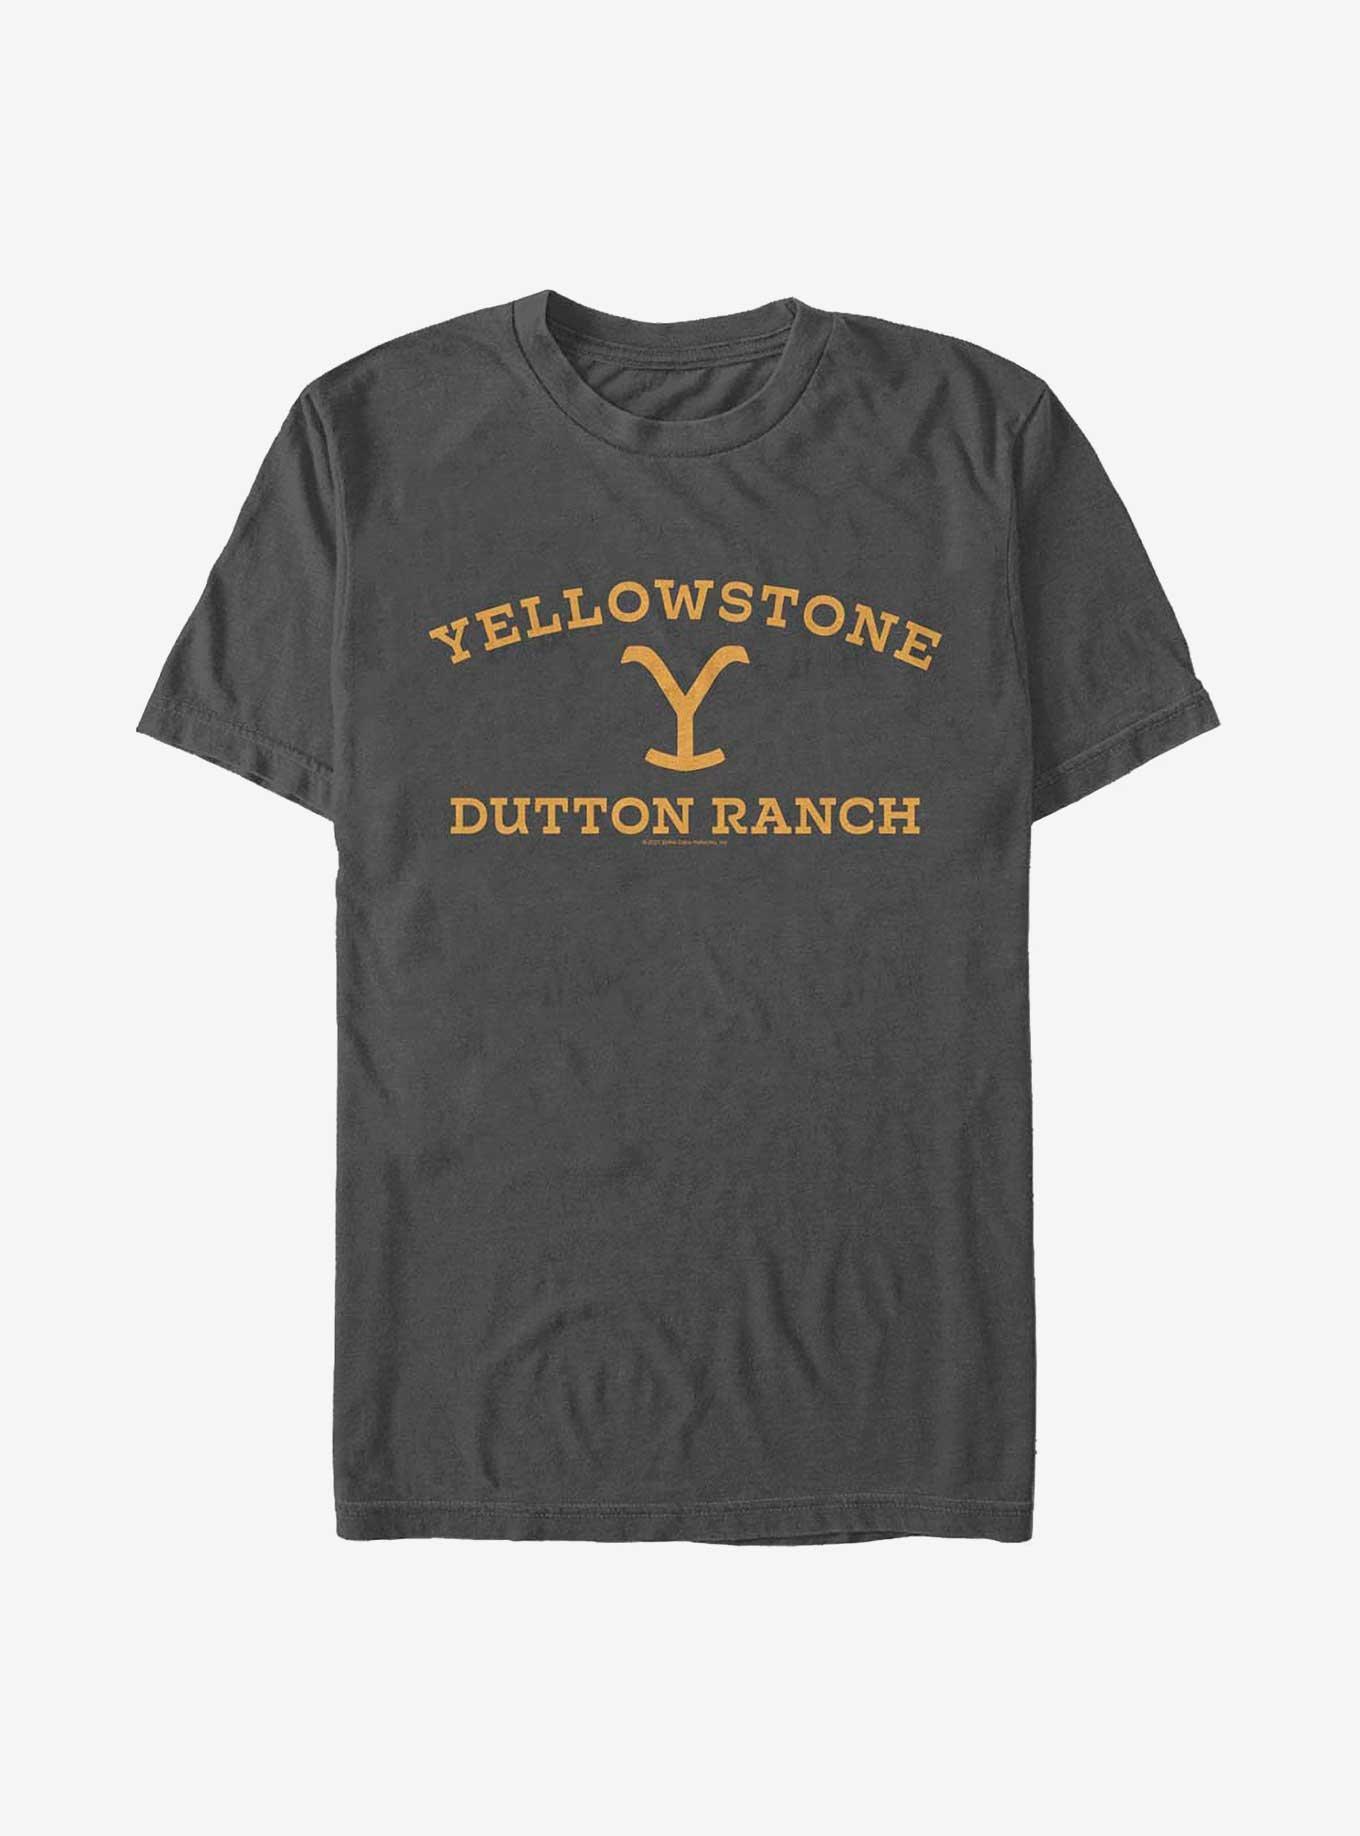 Yellowstone Dutton Ranch Logo T-Shirt, CHARCOAL, hi-res